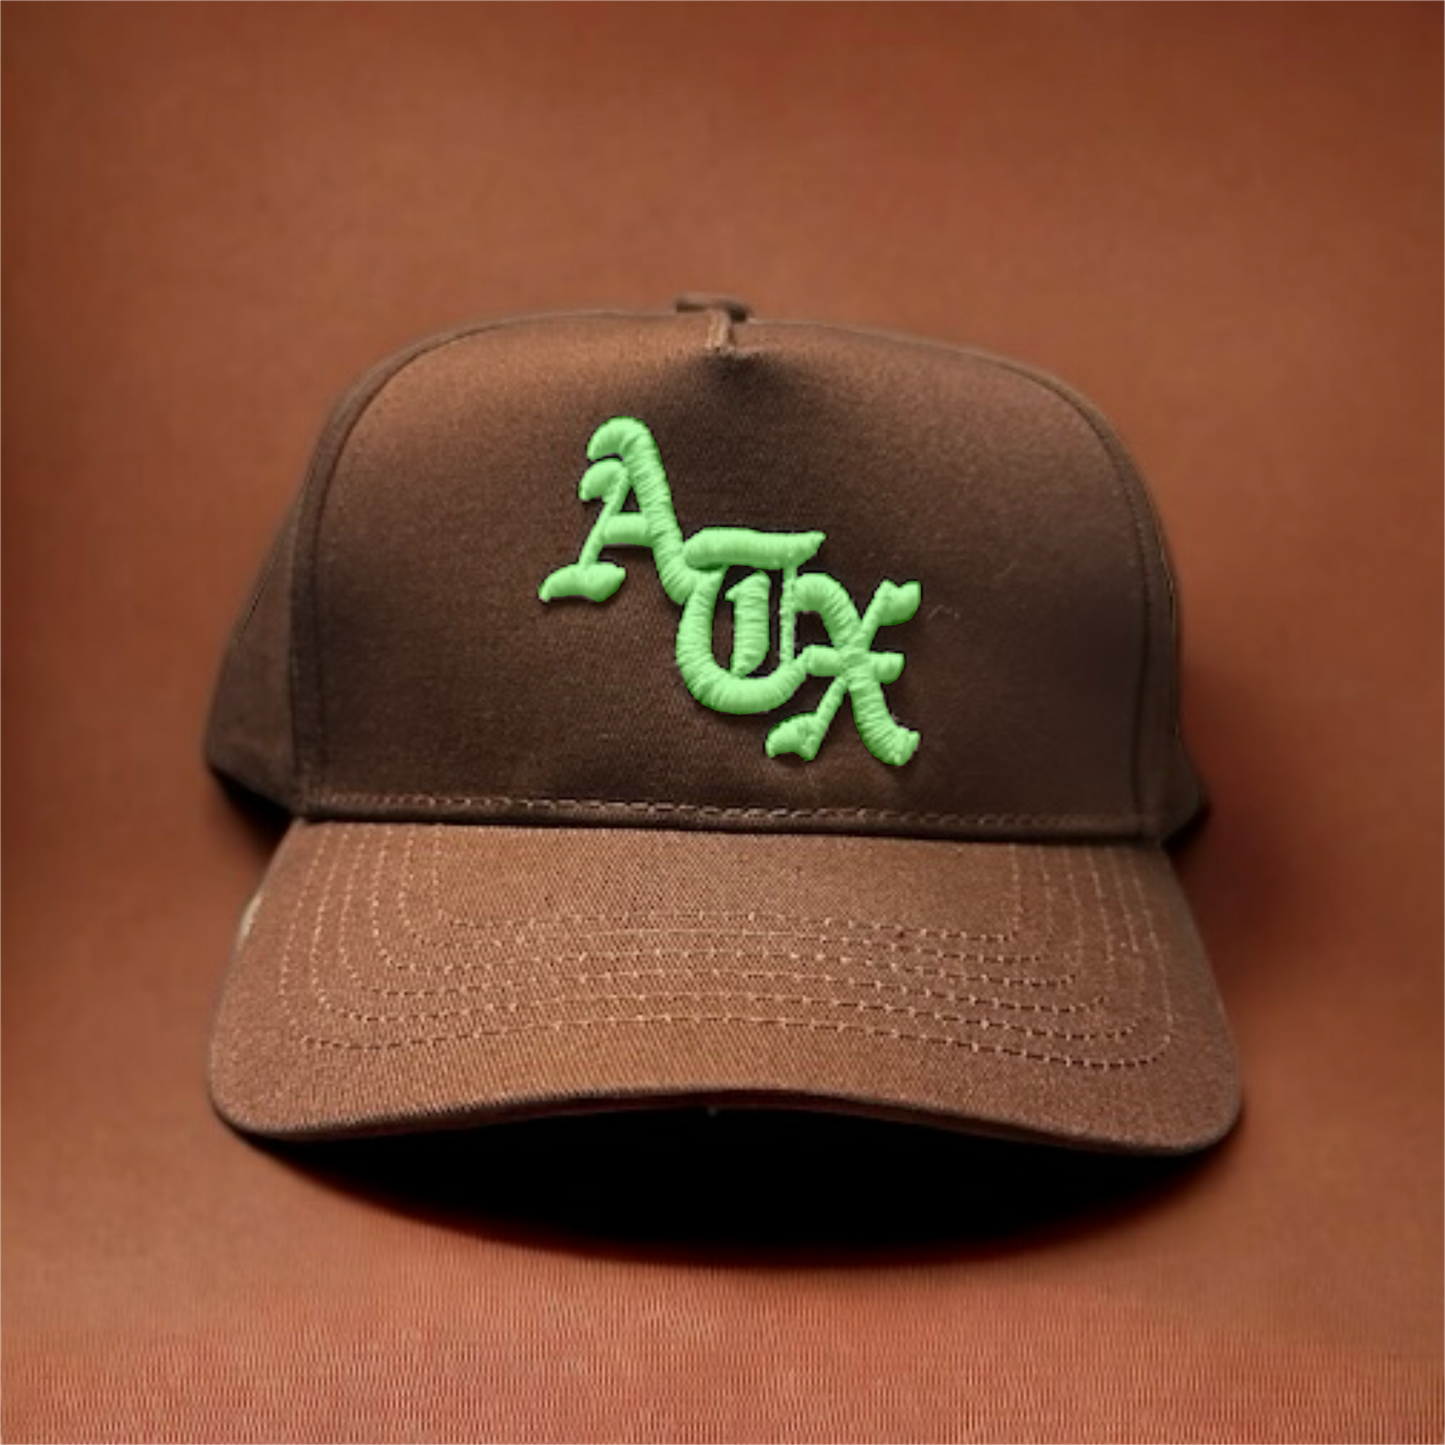 ATX SnapBack Hat Brown (Glow in the Dark)